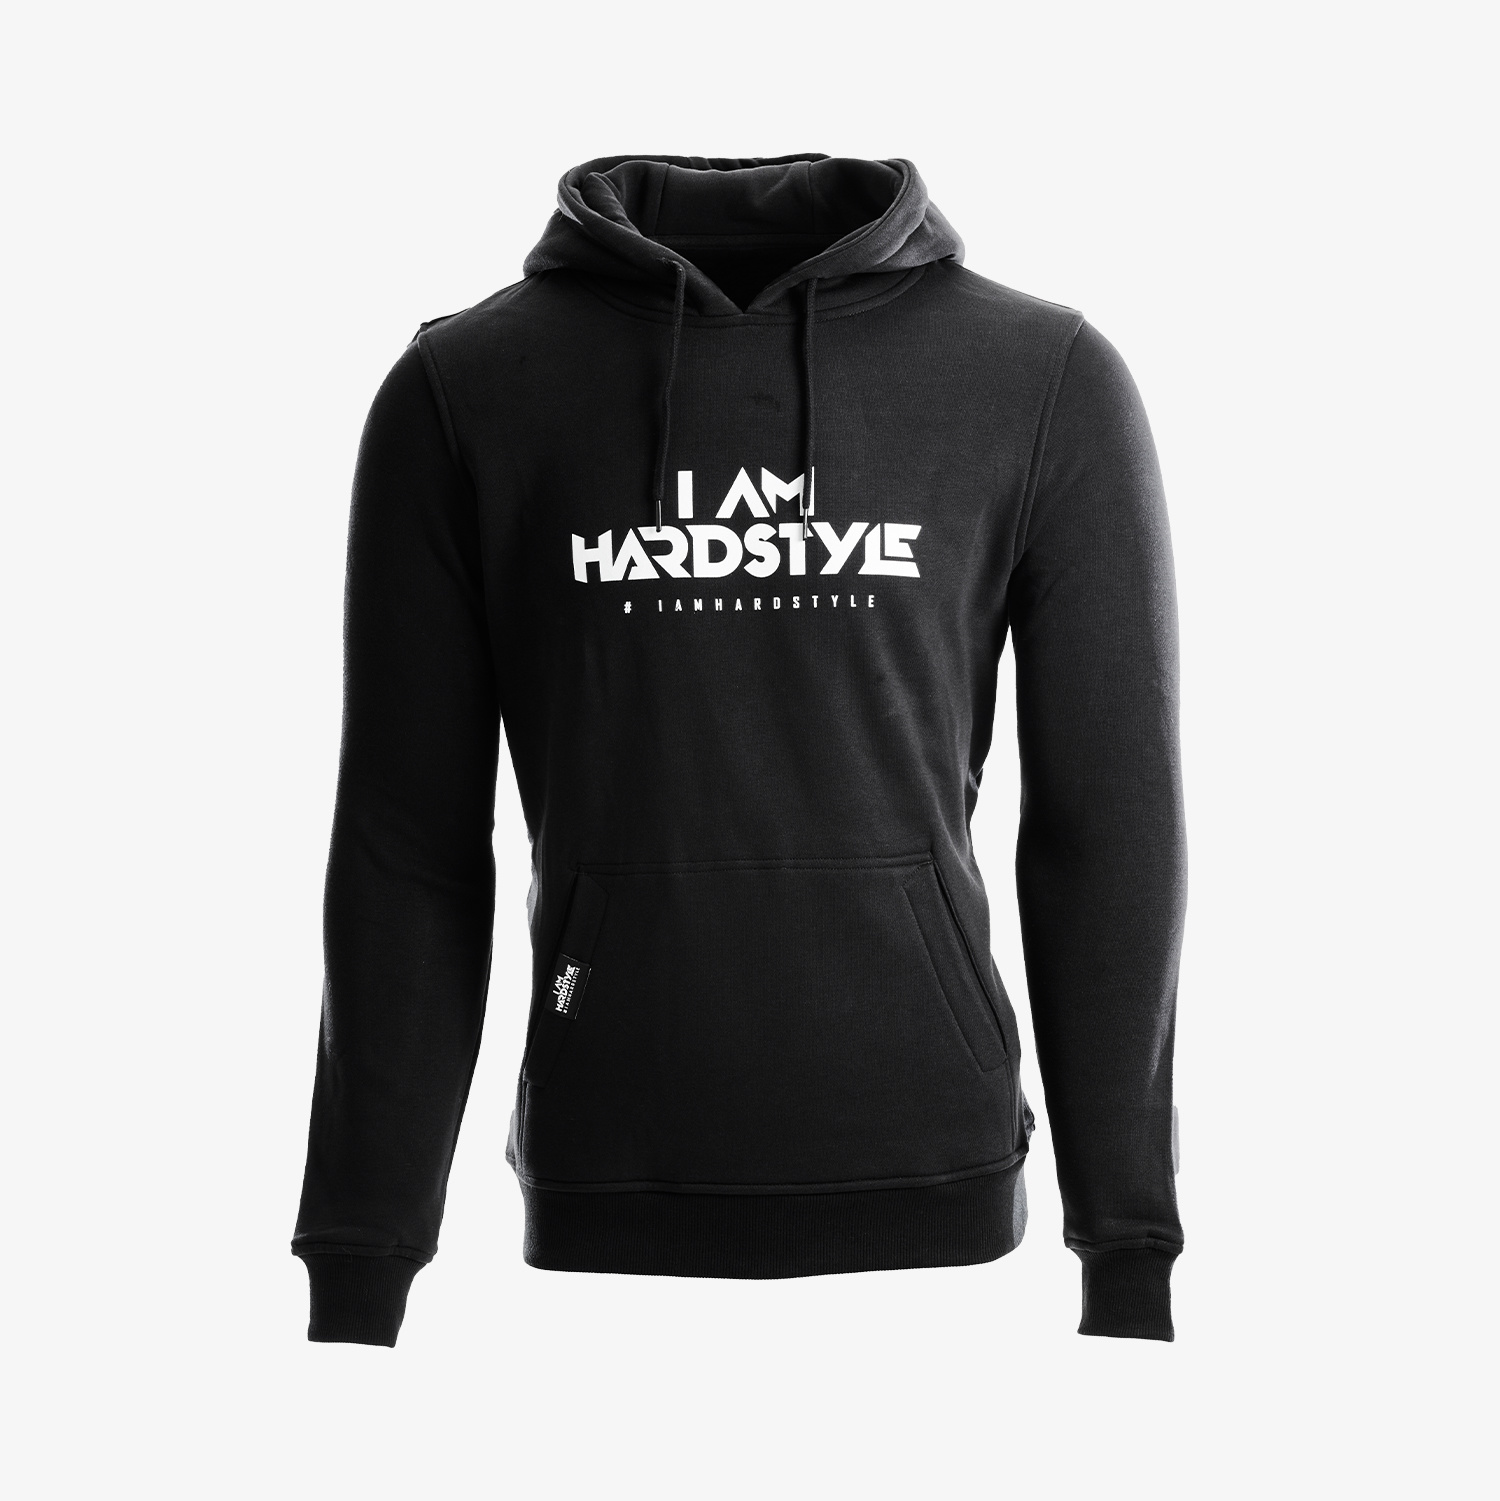 Hoodie (Black/White) - Logo-1